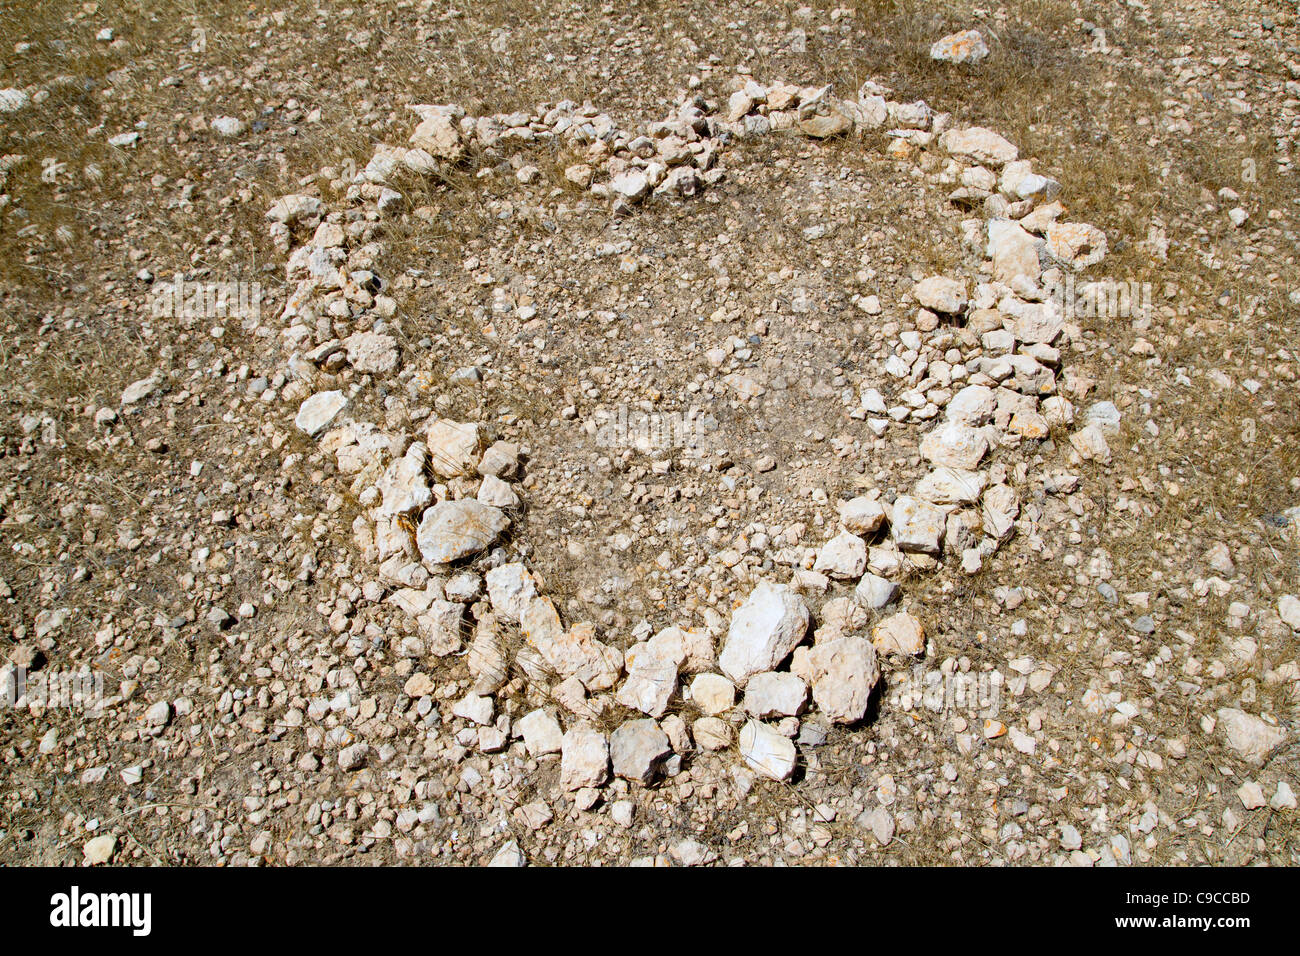 Heart shape symbol of stones like a love metaphor sign Stock Photo